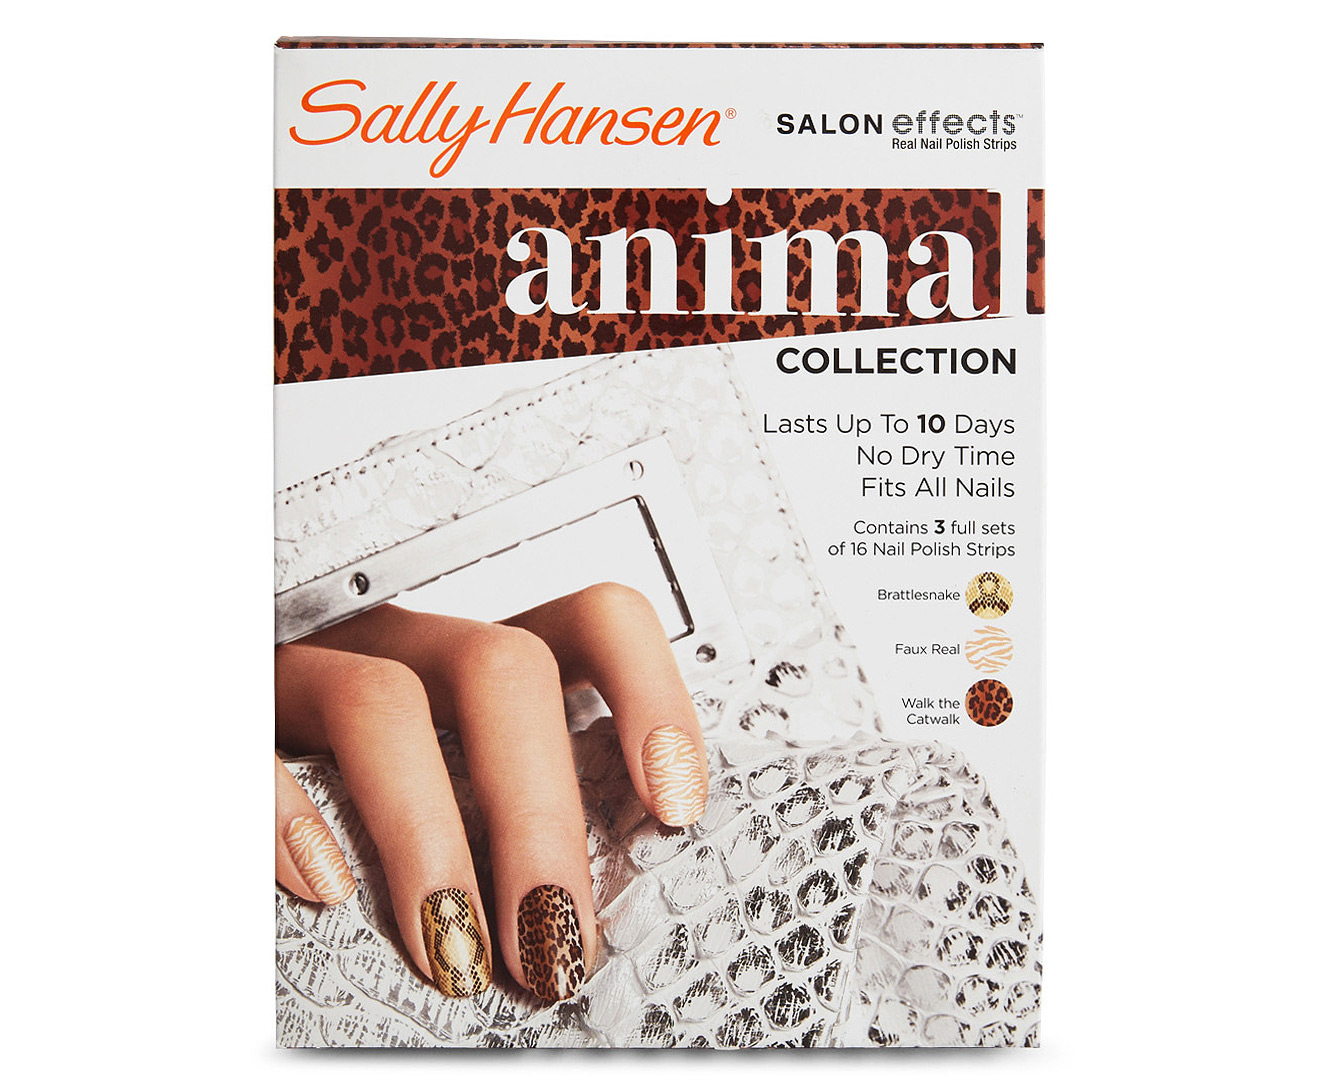 6. Sally Hansen Salon Effects Real Nail Polish Strips - wide 6